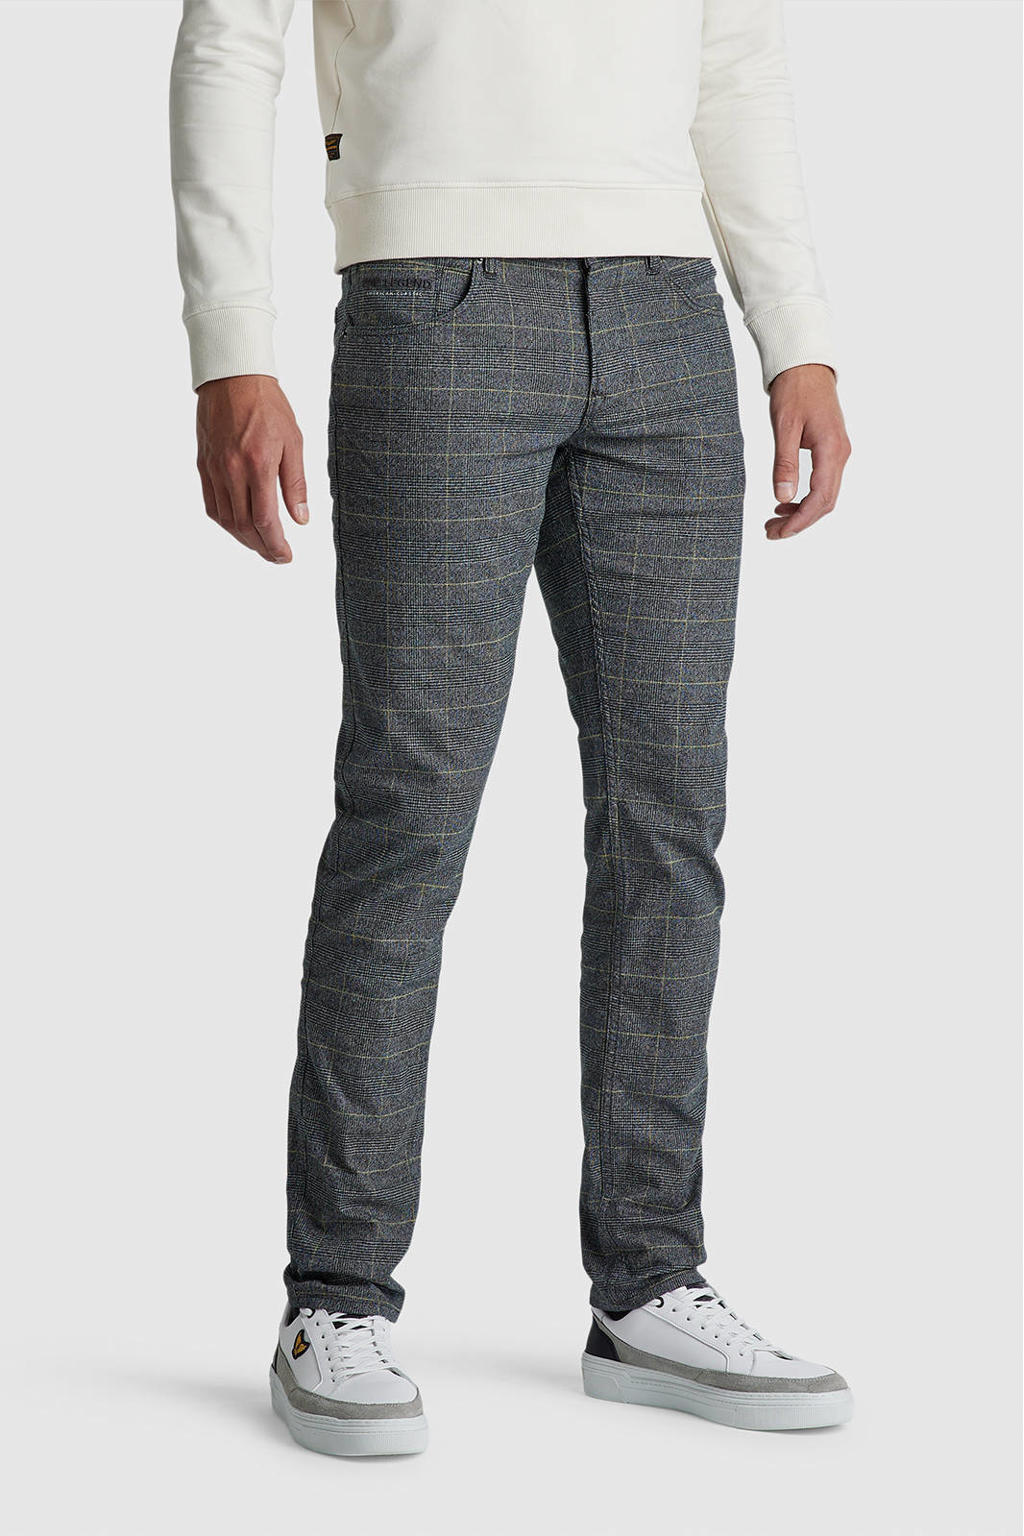 PME Legend regular straight fit jeans Nightflight 9079 grijs